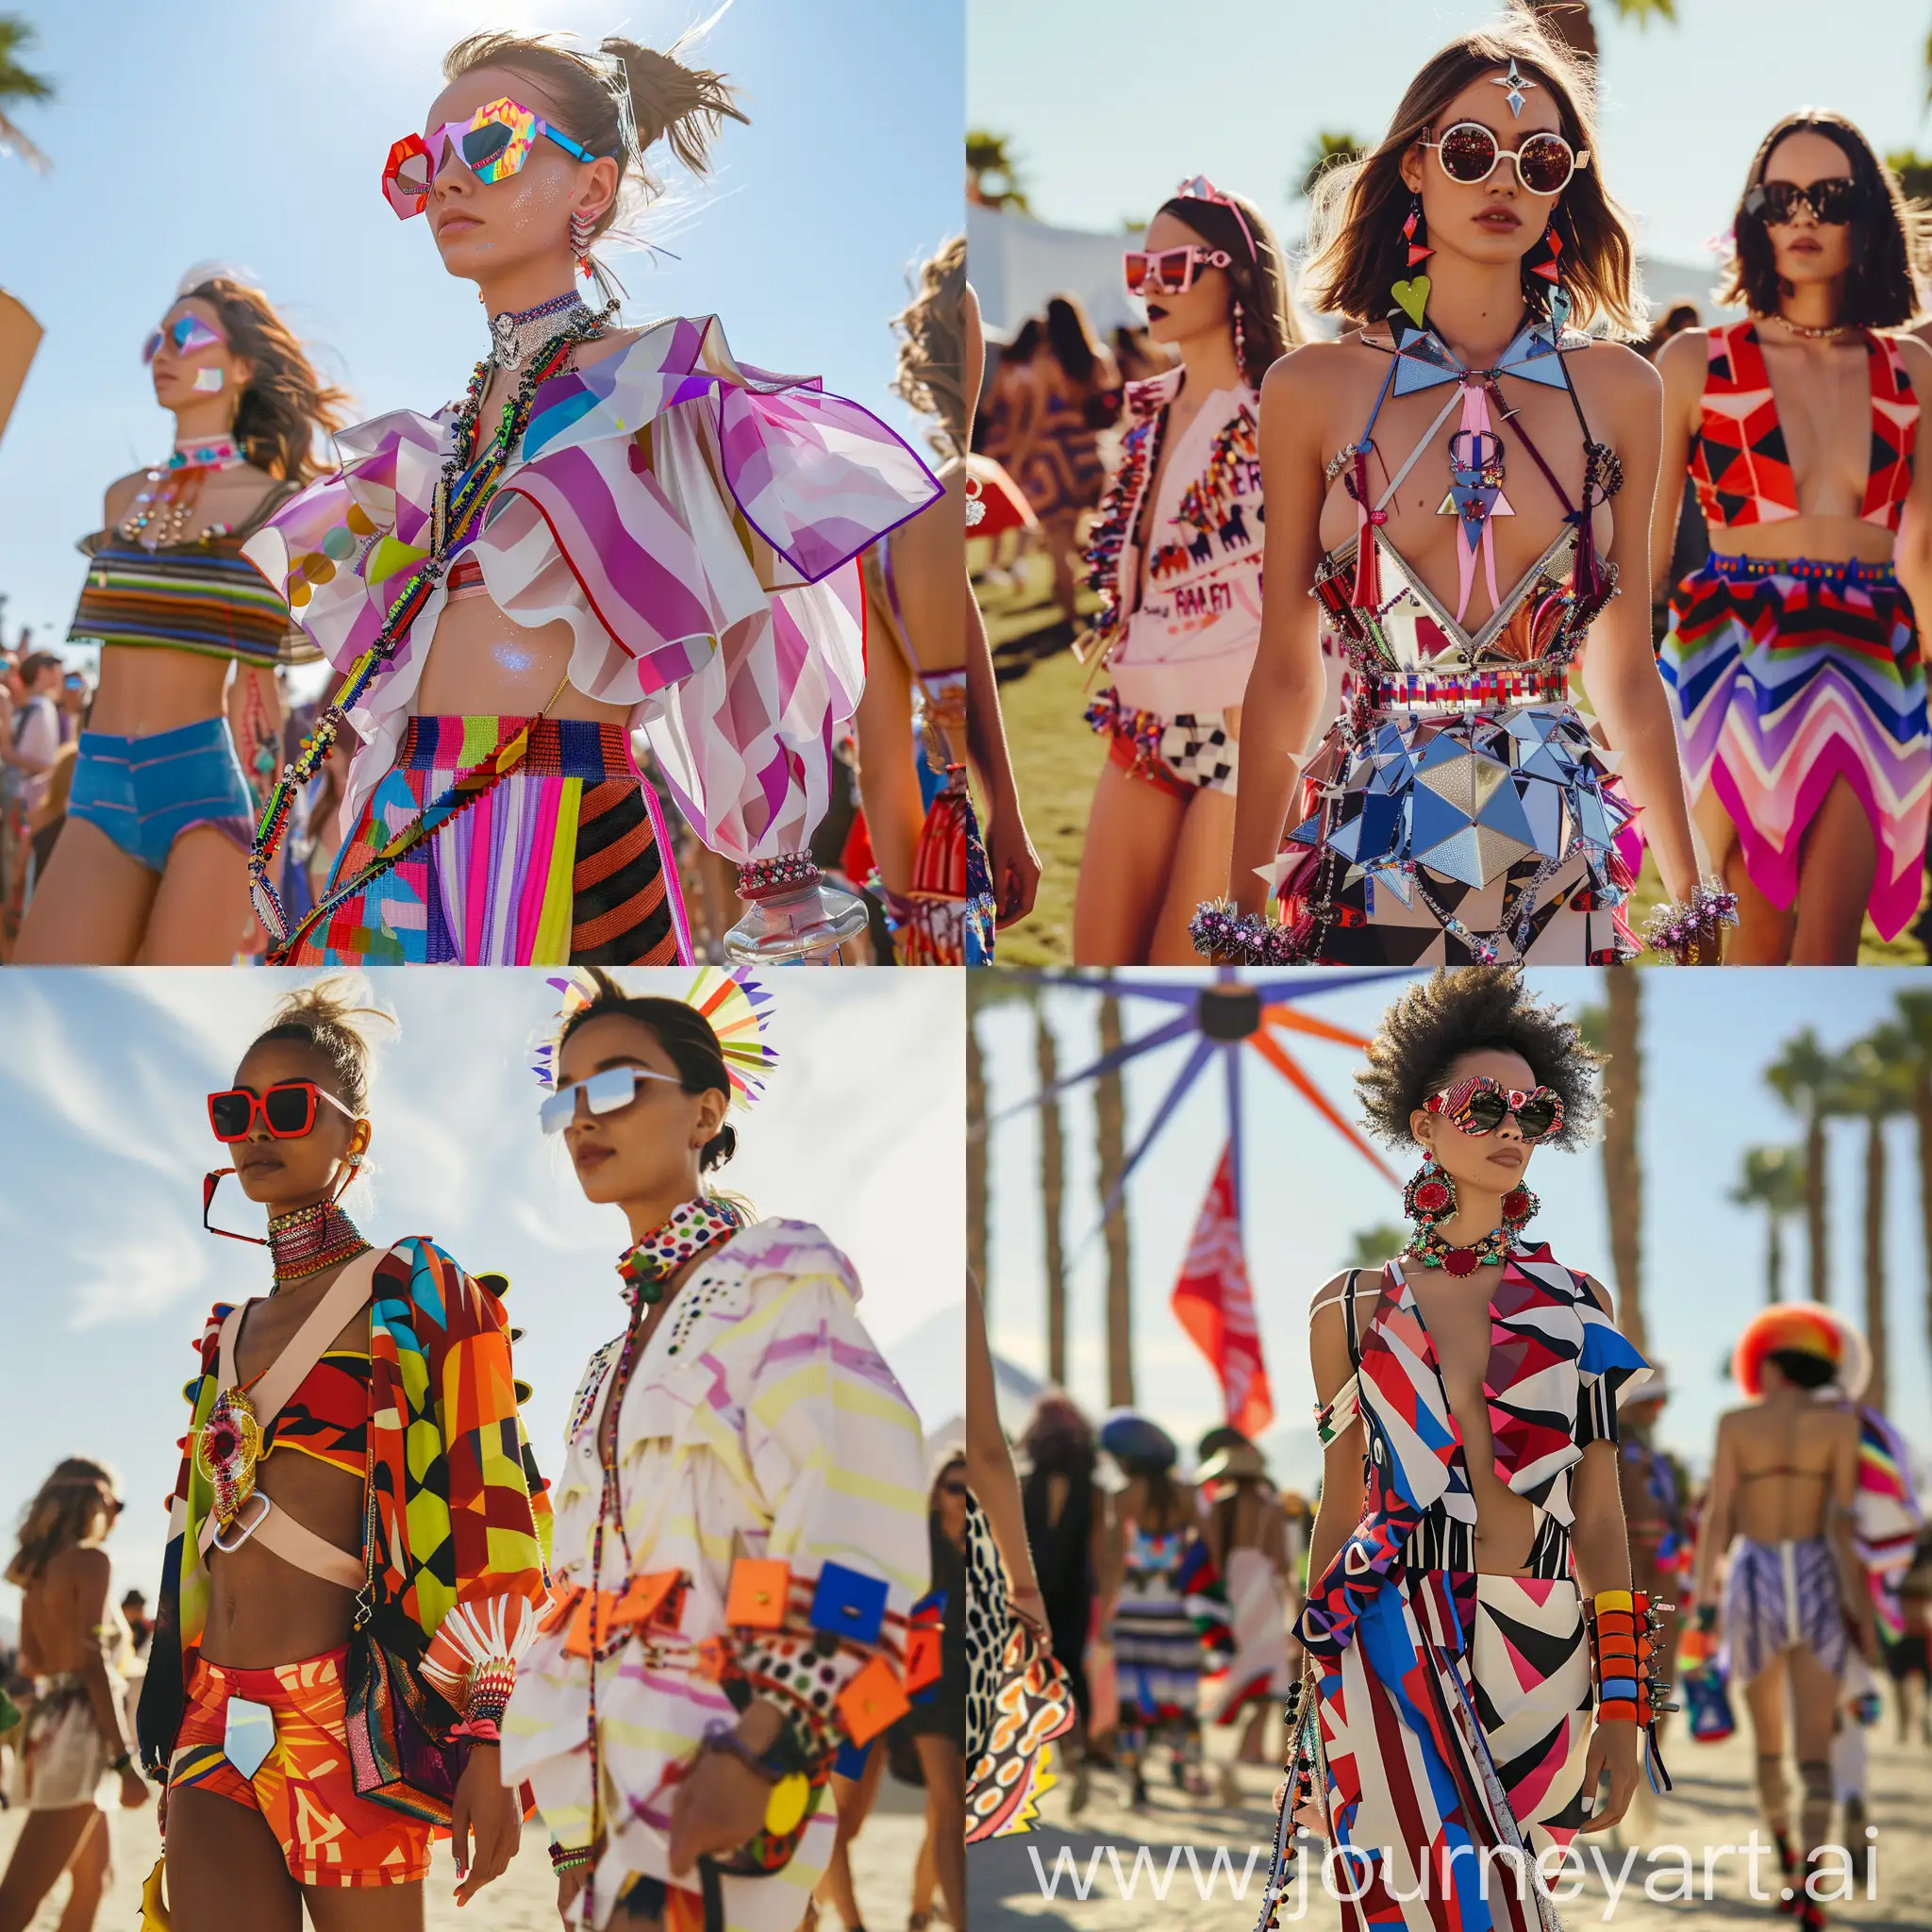 Vibrant-Asymmetrical-Fashion-Parade-at-Coachella-Festival